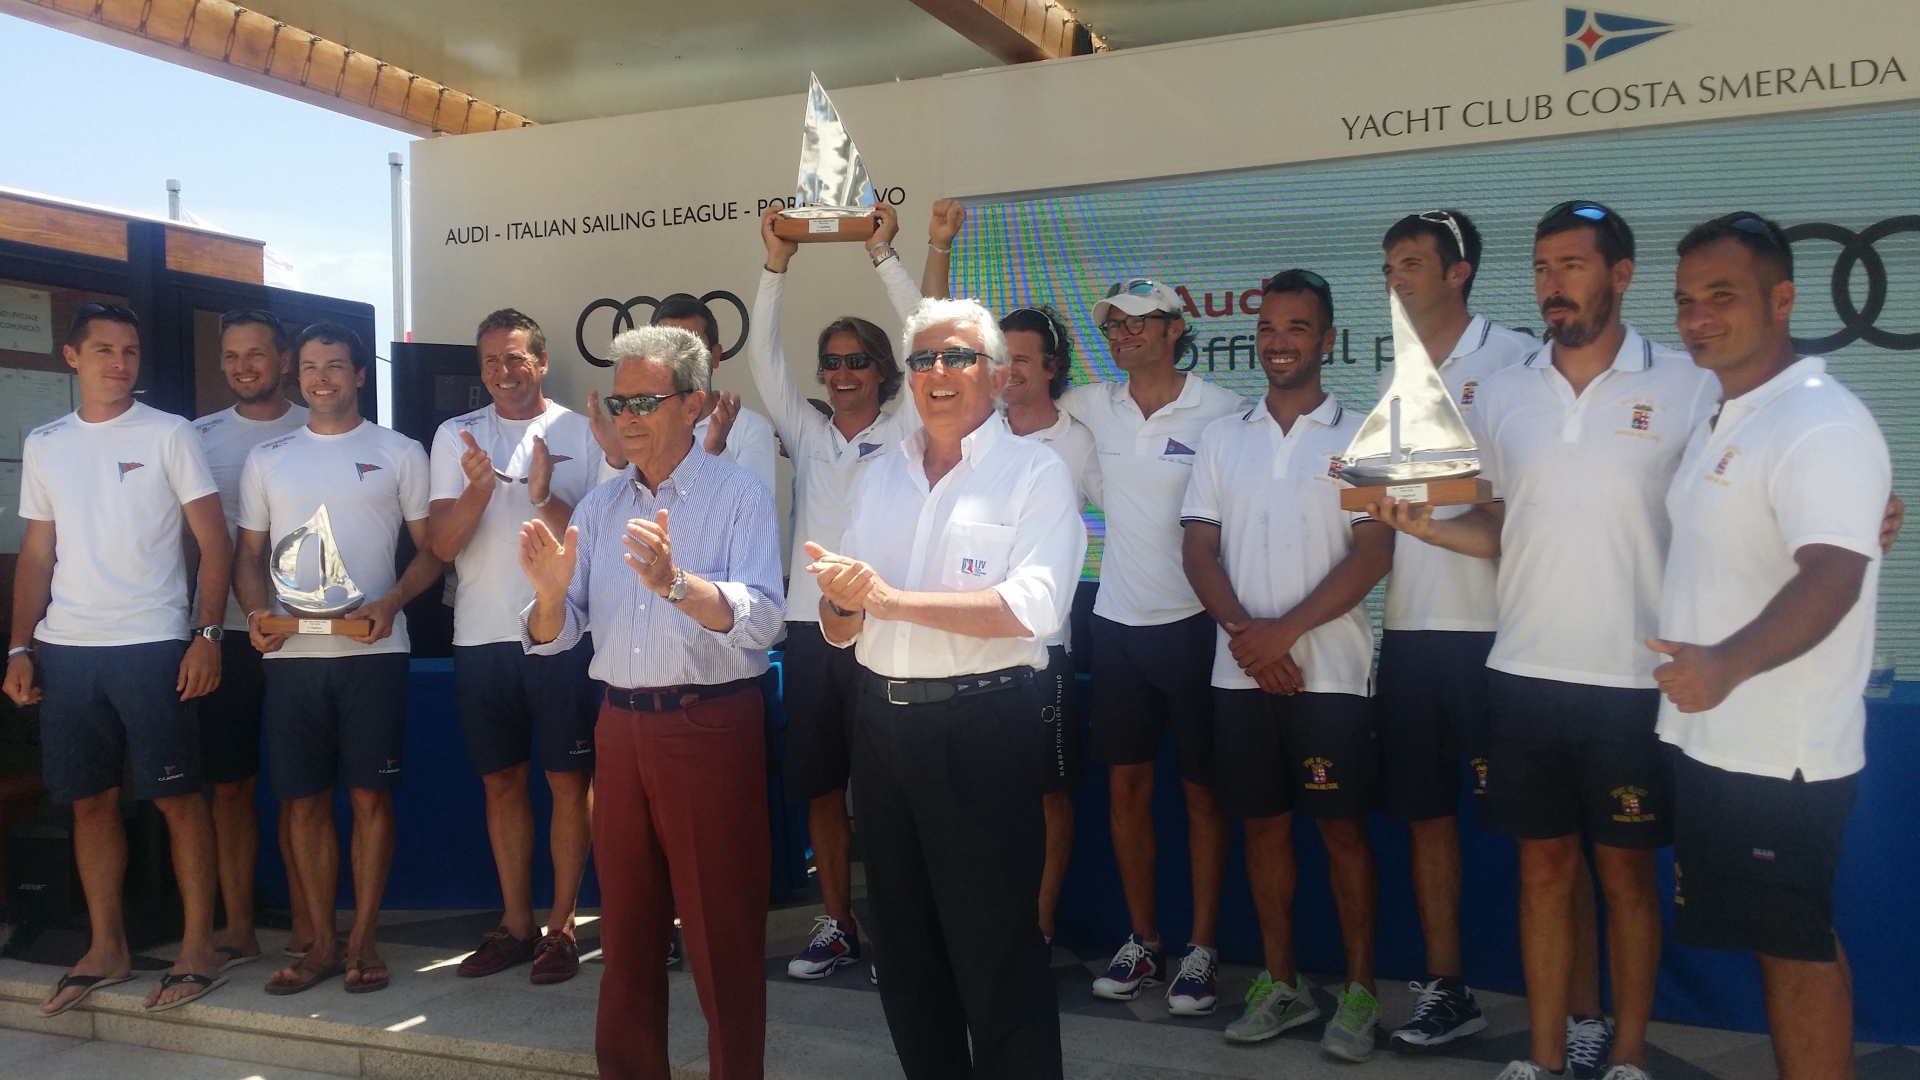 Club Vela Portocivitanova vince la Audi Italian Sailing League - News - Yacht Club Costa Smeralda